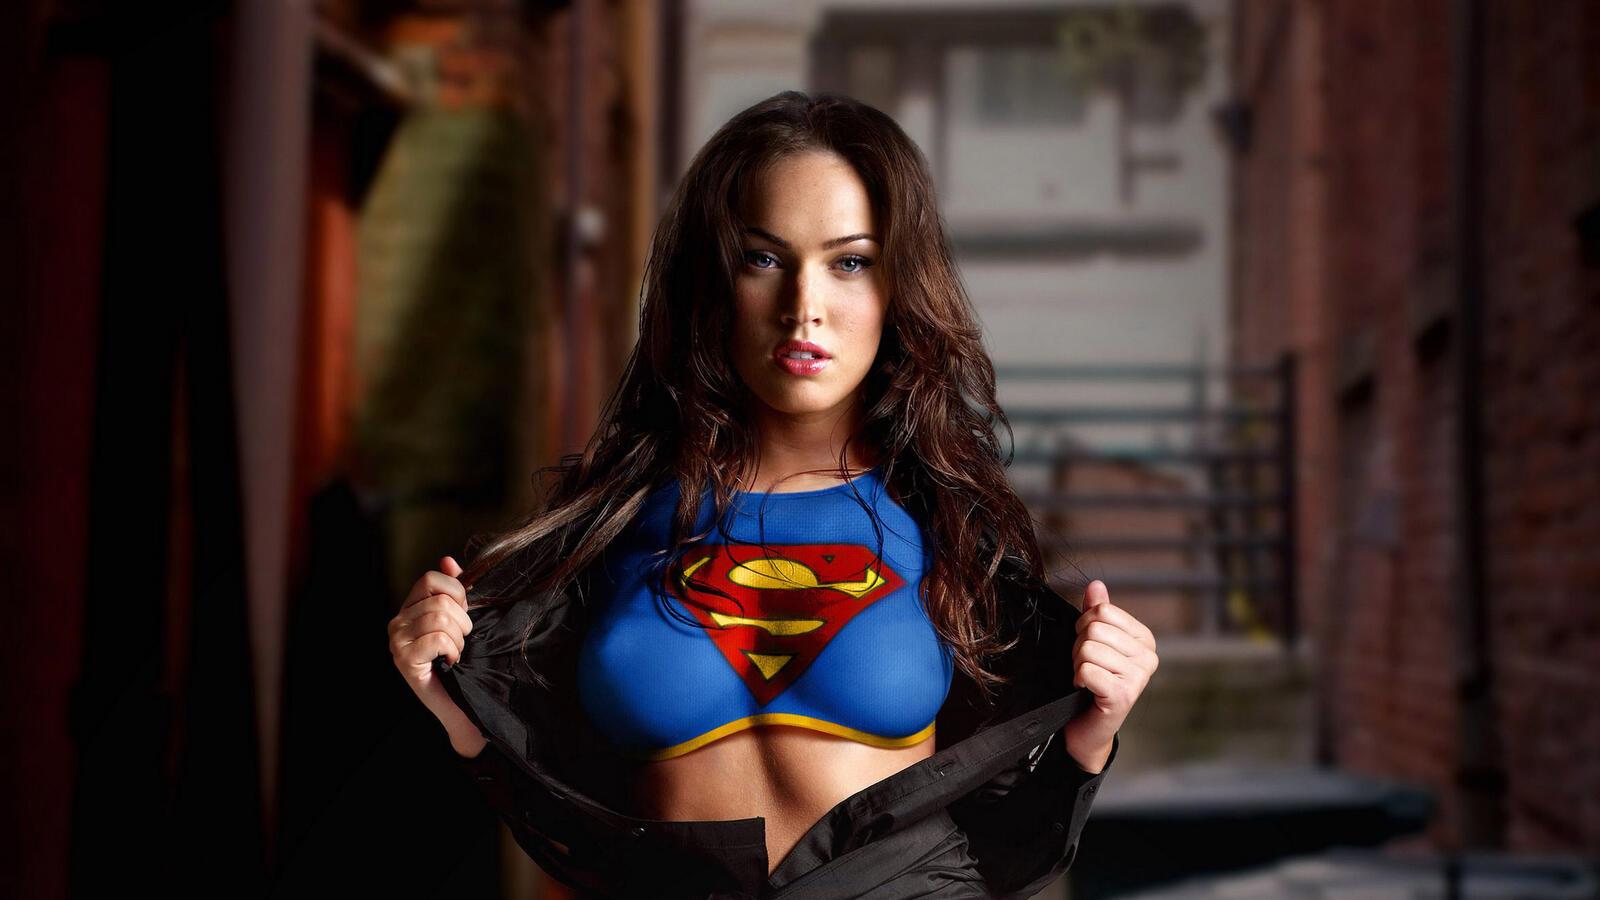 Wallpapers Megan Fox supergirl cosplay on the desktop